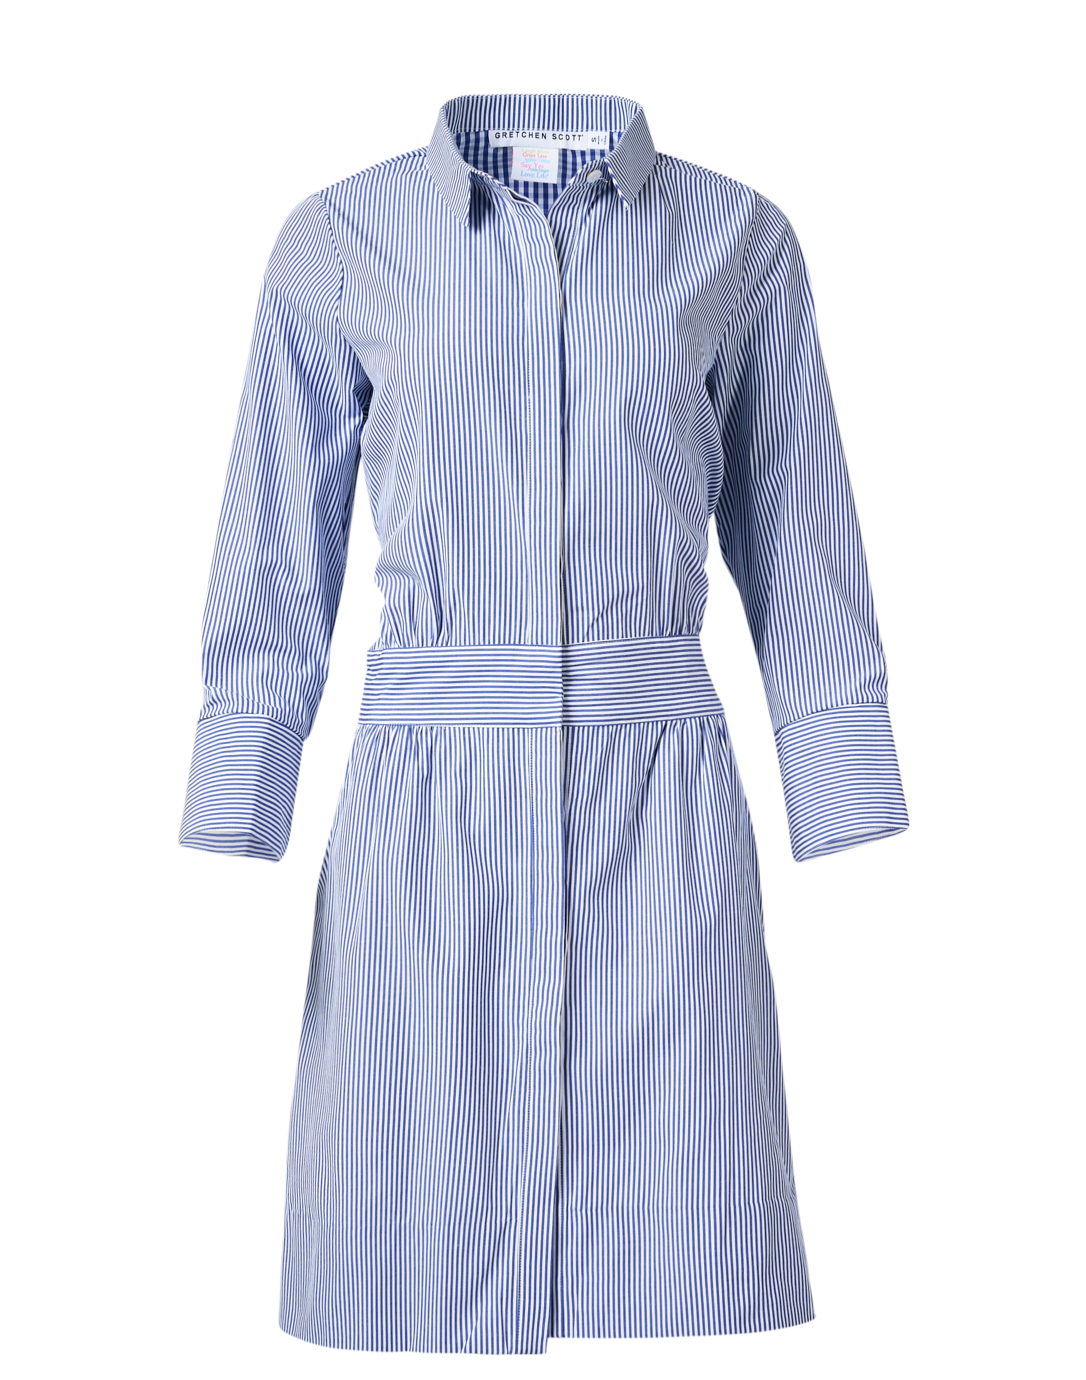 Breezy Blouson Navy and White Striped Shirt Dress | Gretchen Scott